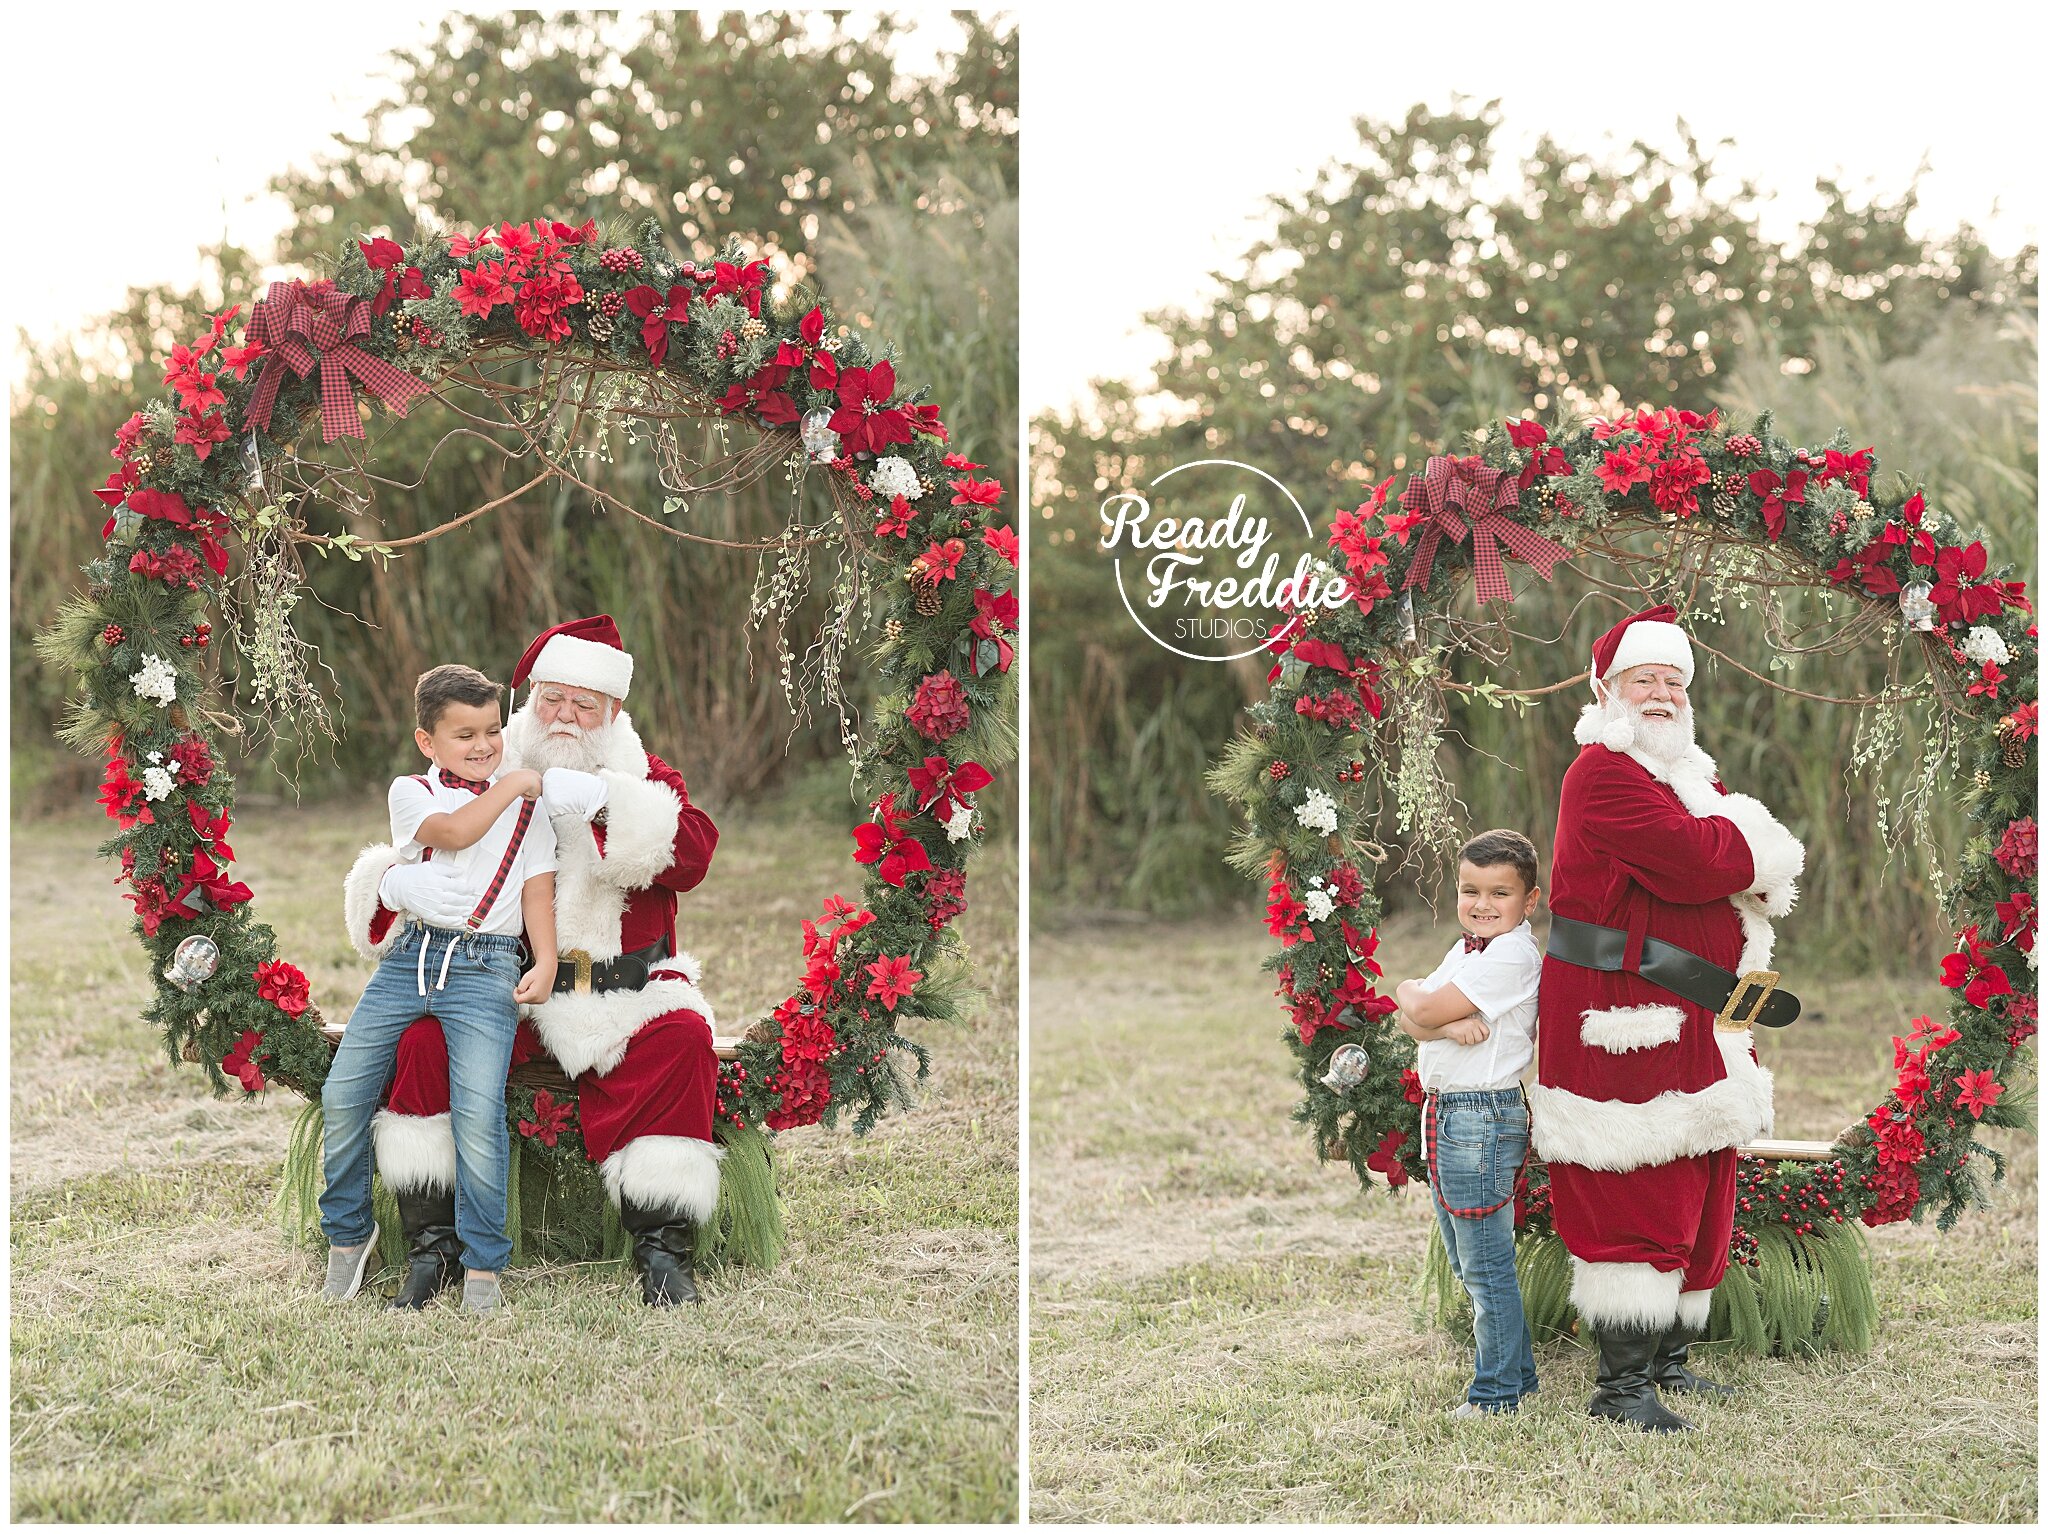 Cool older boy with Santa and outdoor giant wreath | Ready Freddie Studios Miami, FL